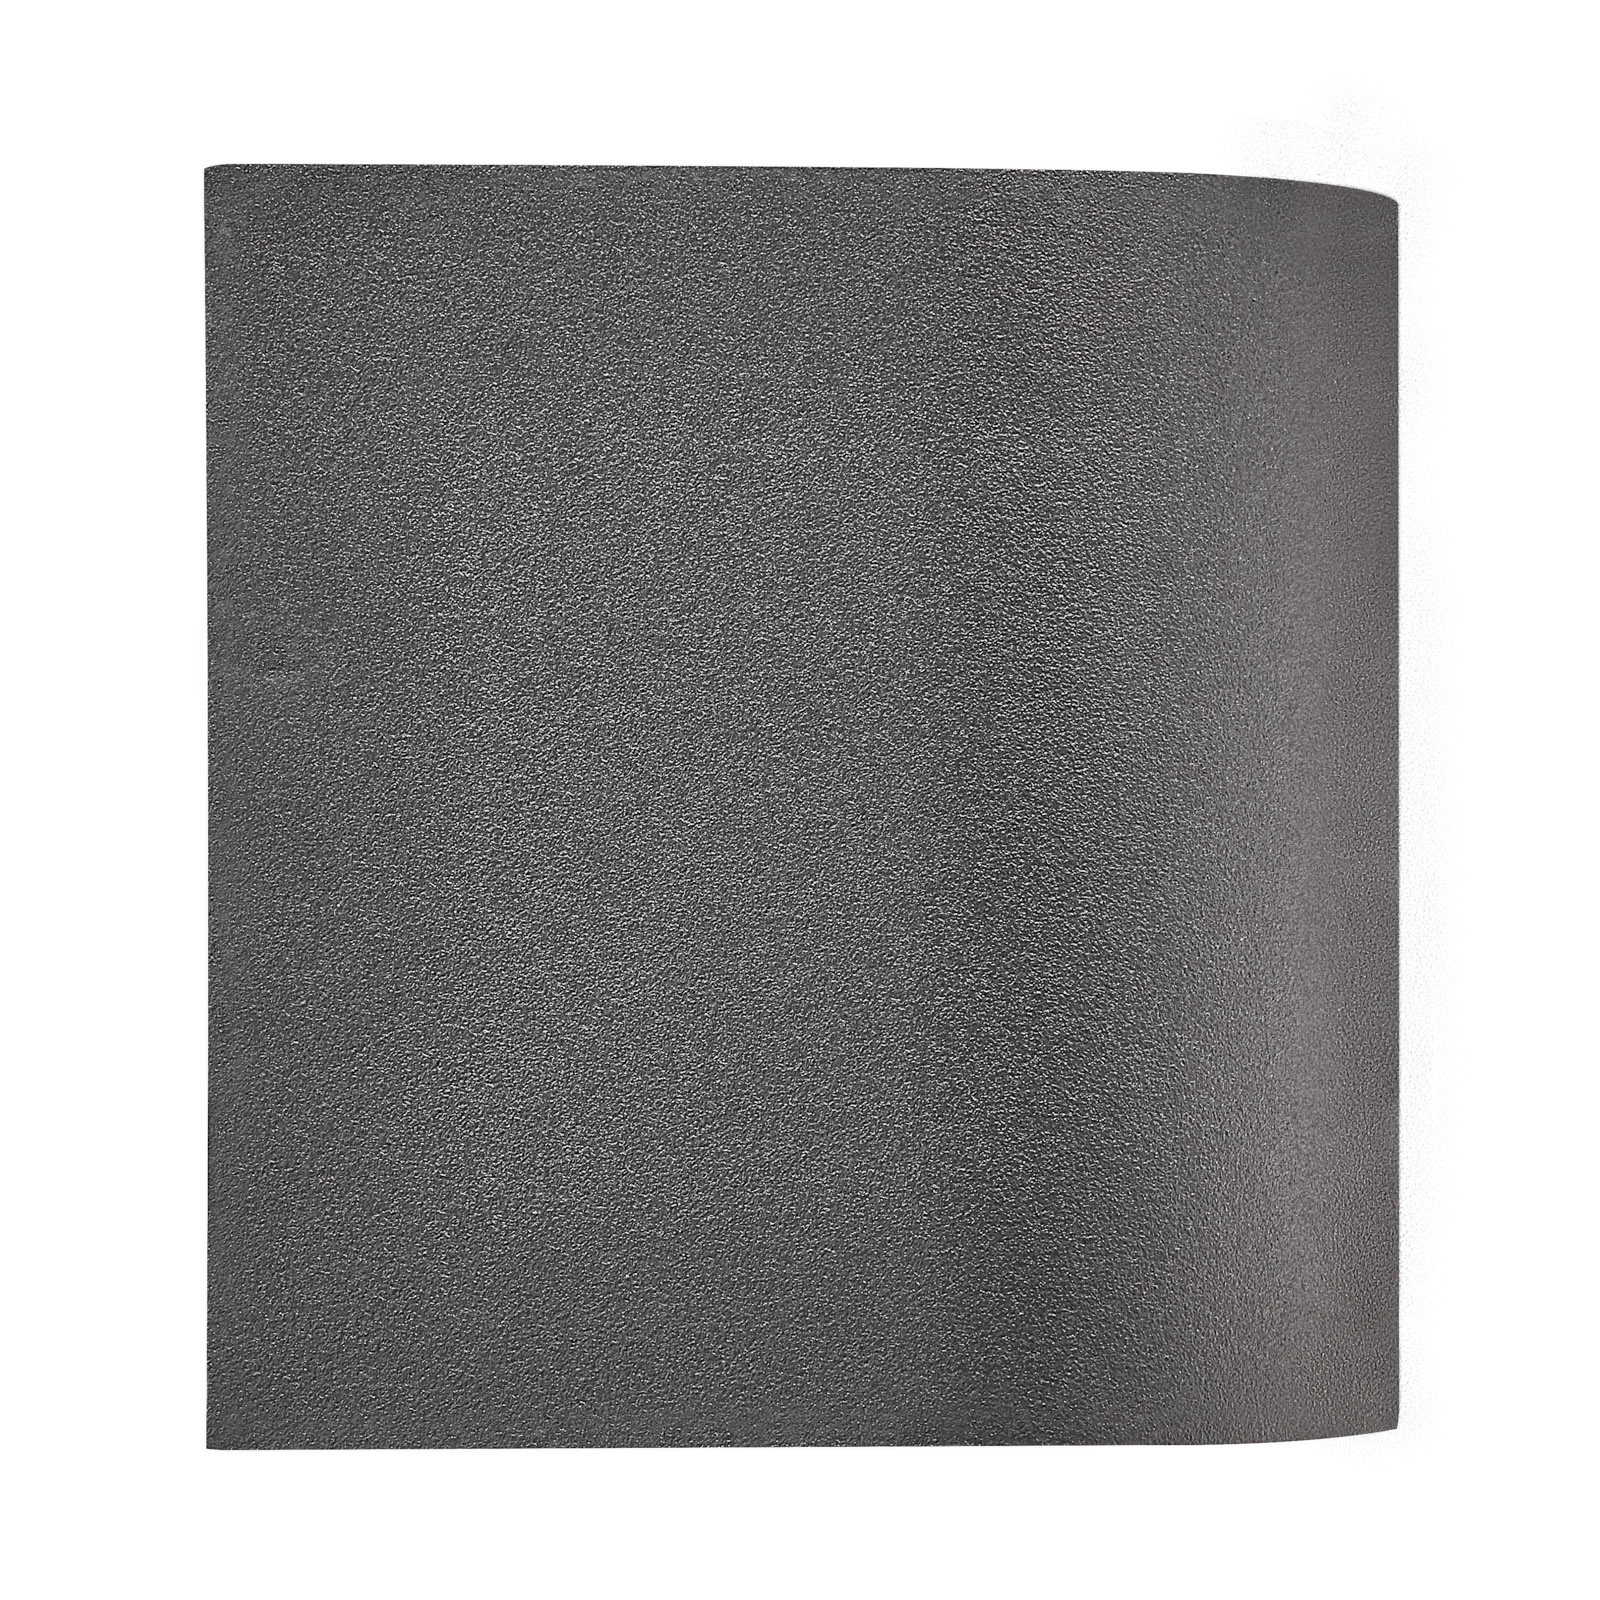 LED-Außenwandleuchte Canto 2 Seaside, schwarz, Alu, 10 cm